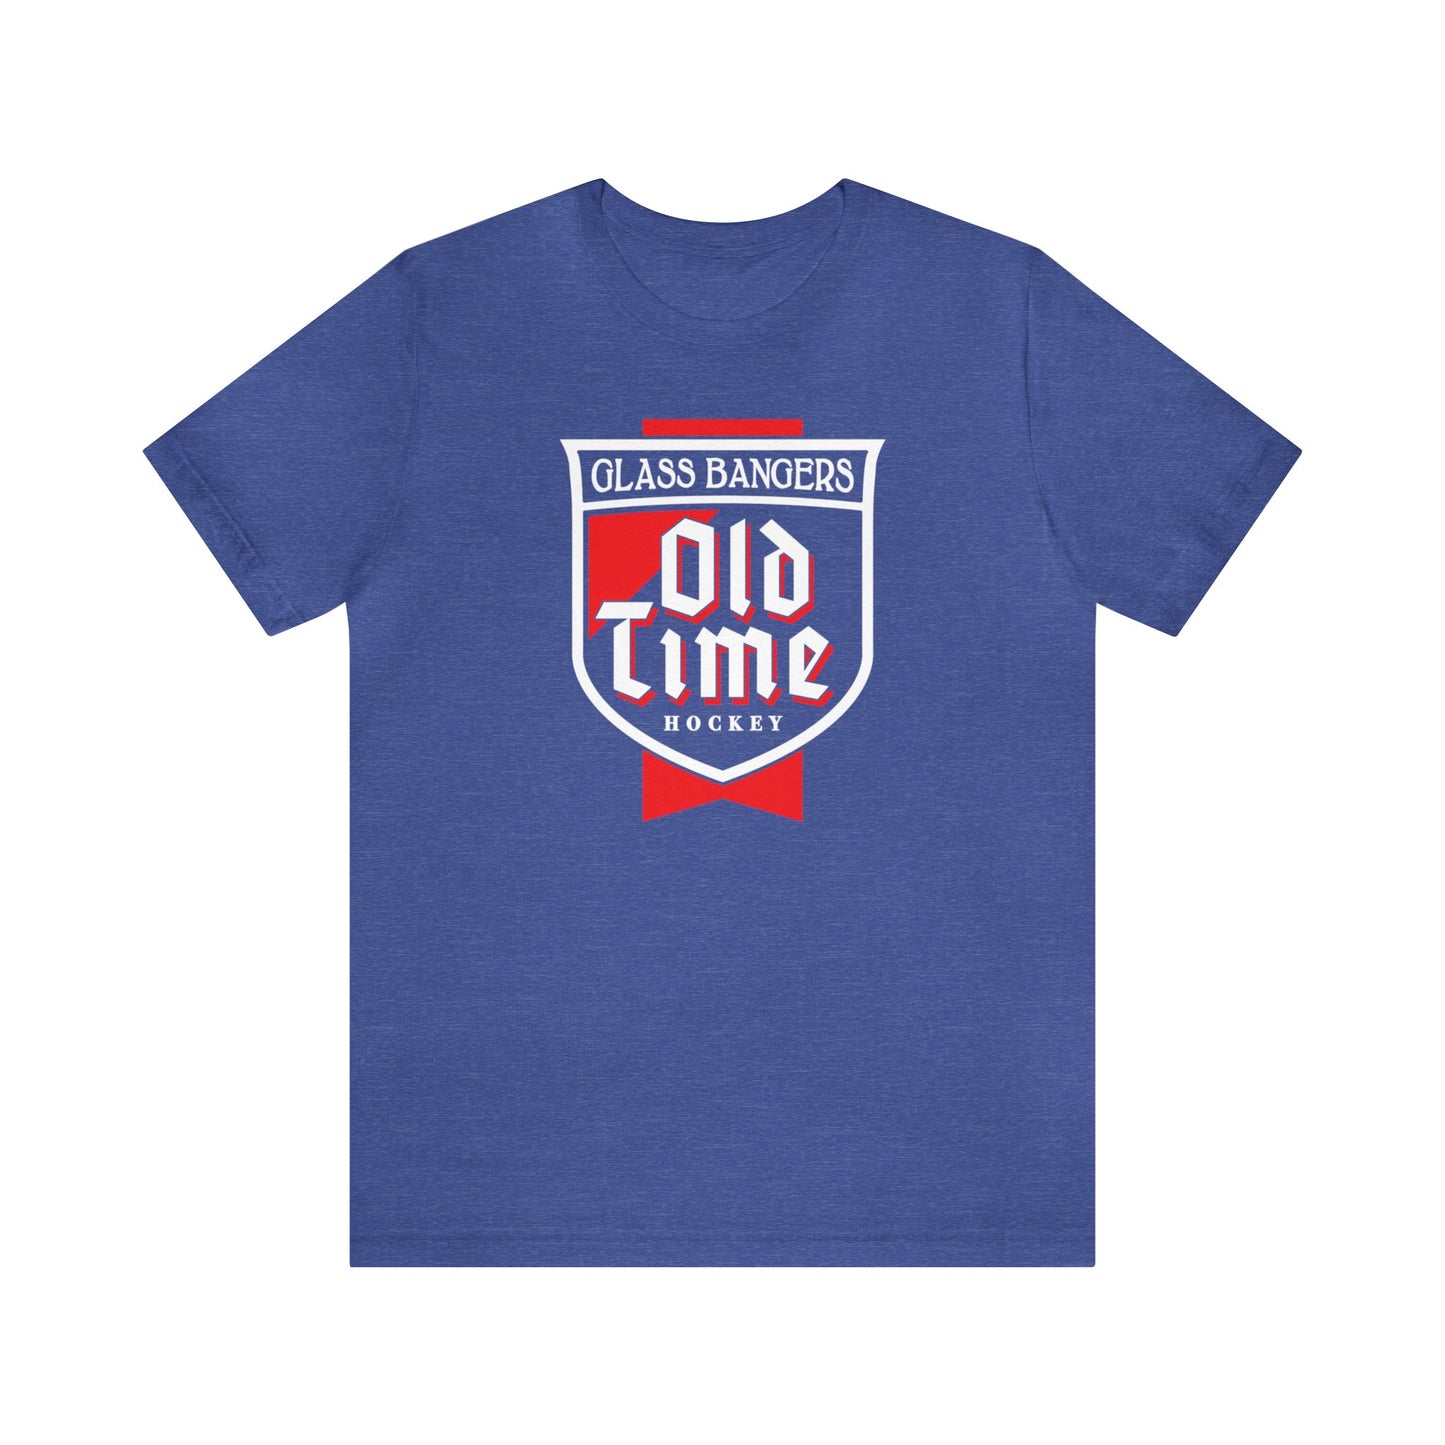 Old Time Hockey Tee